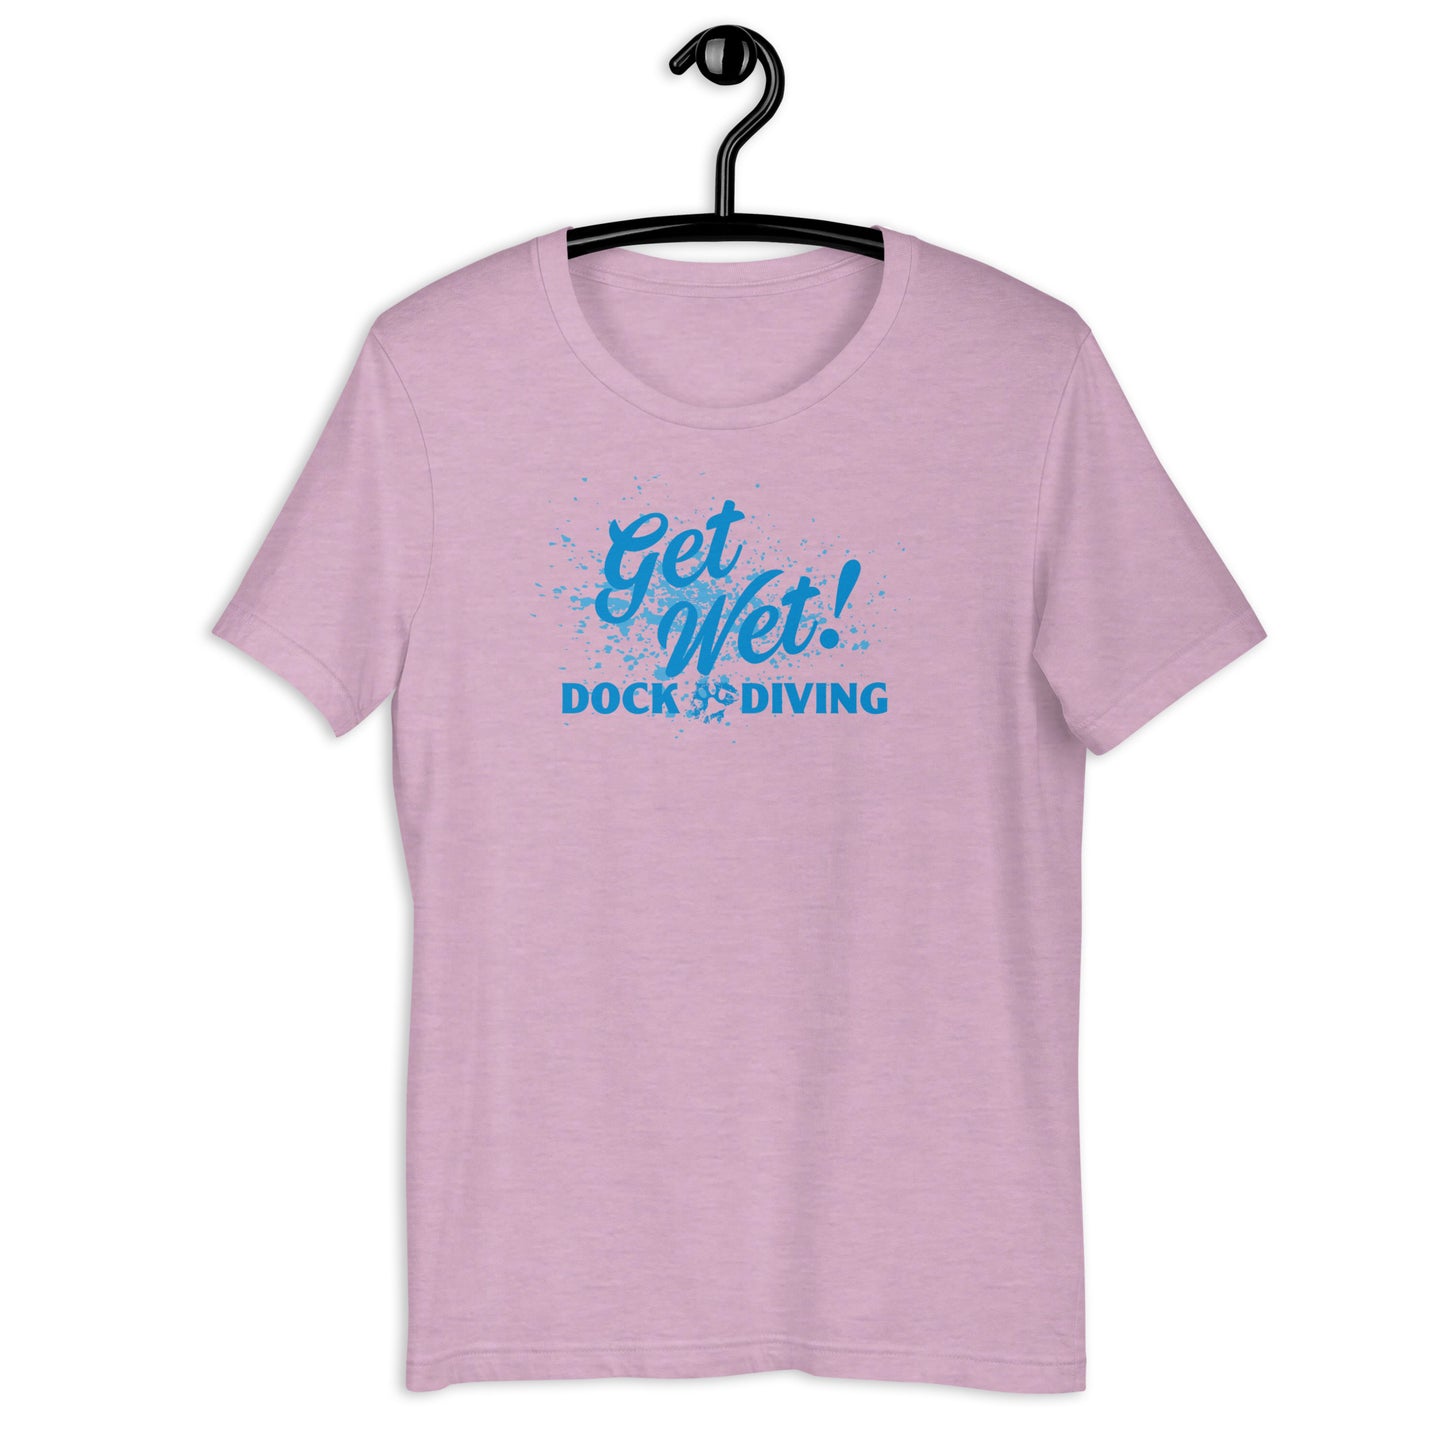 GET WET, DOCK DIVING - Unisex t-shirt